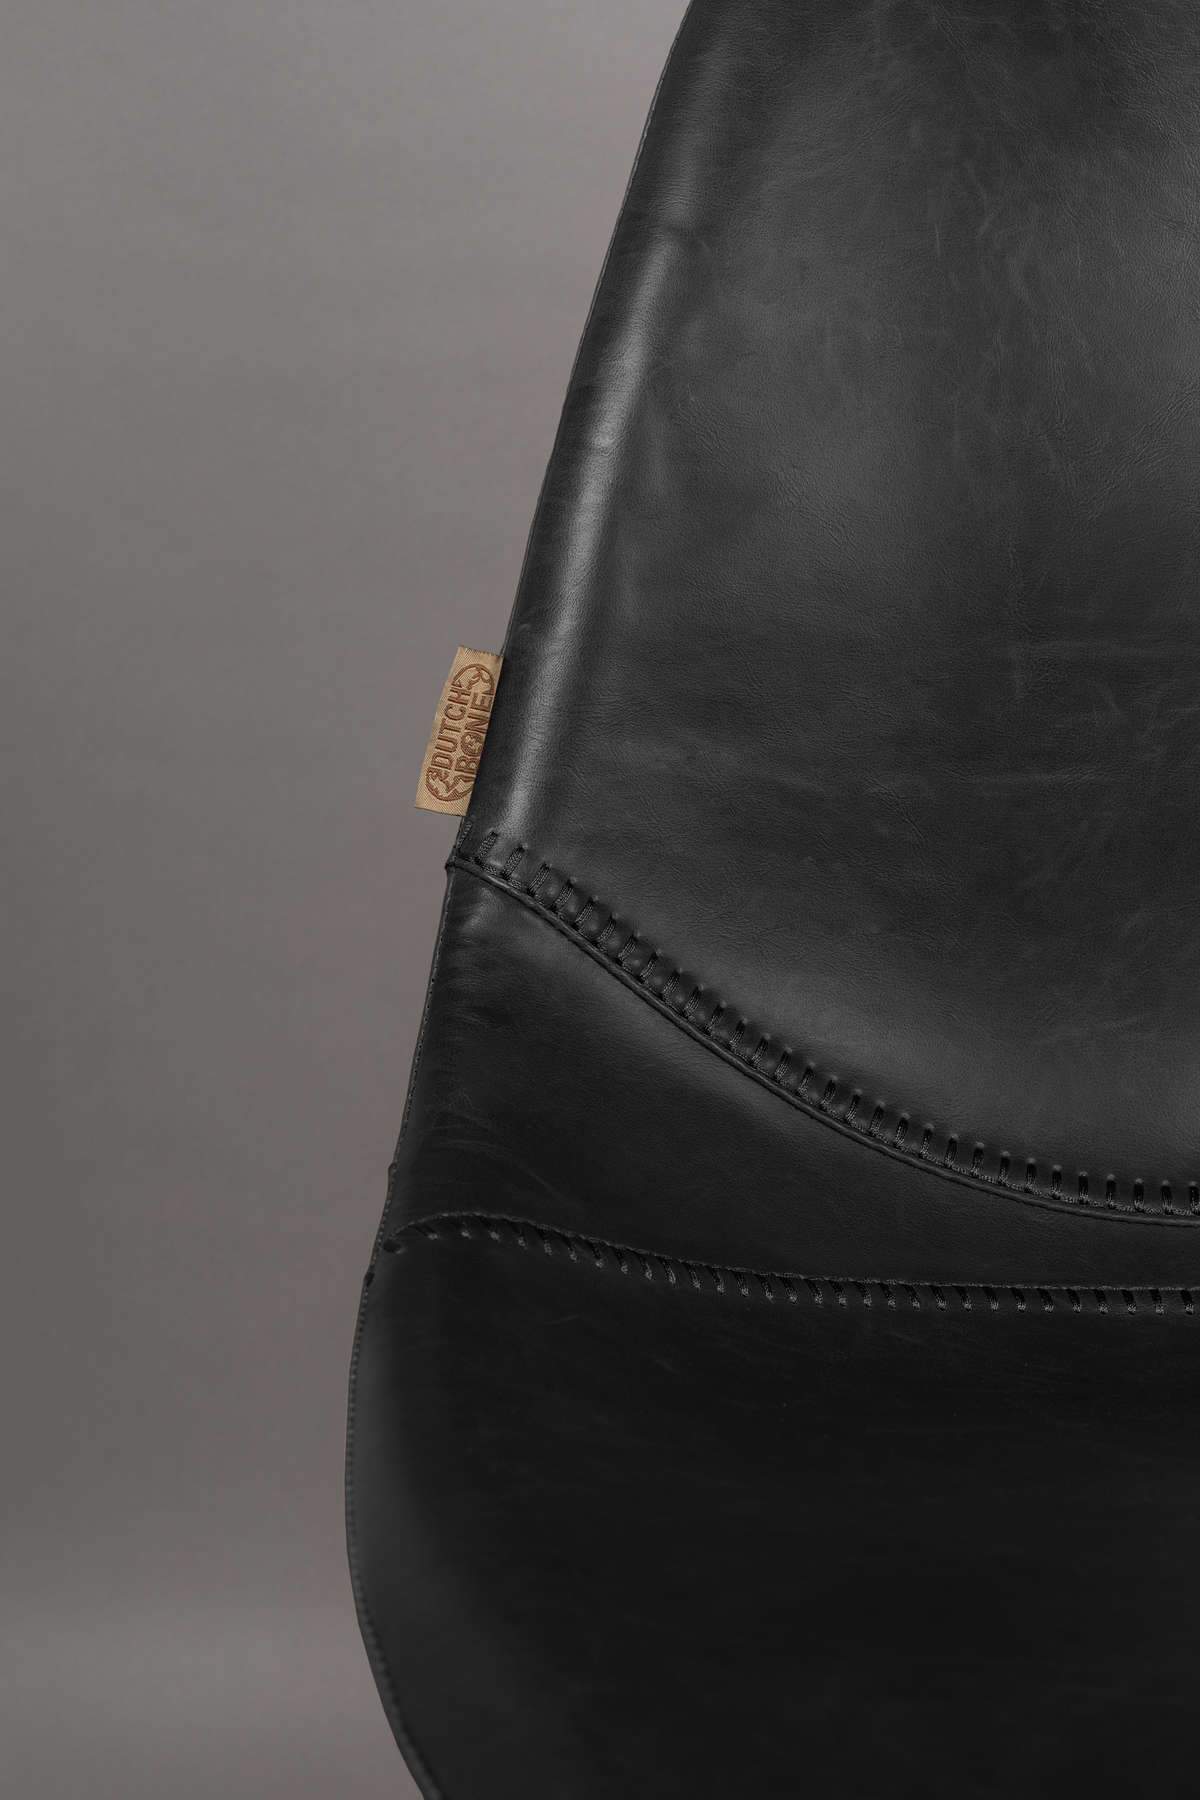 Office chair FRANKY eco leather black, Dutchbone, Eye on Design